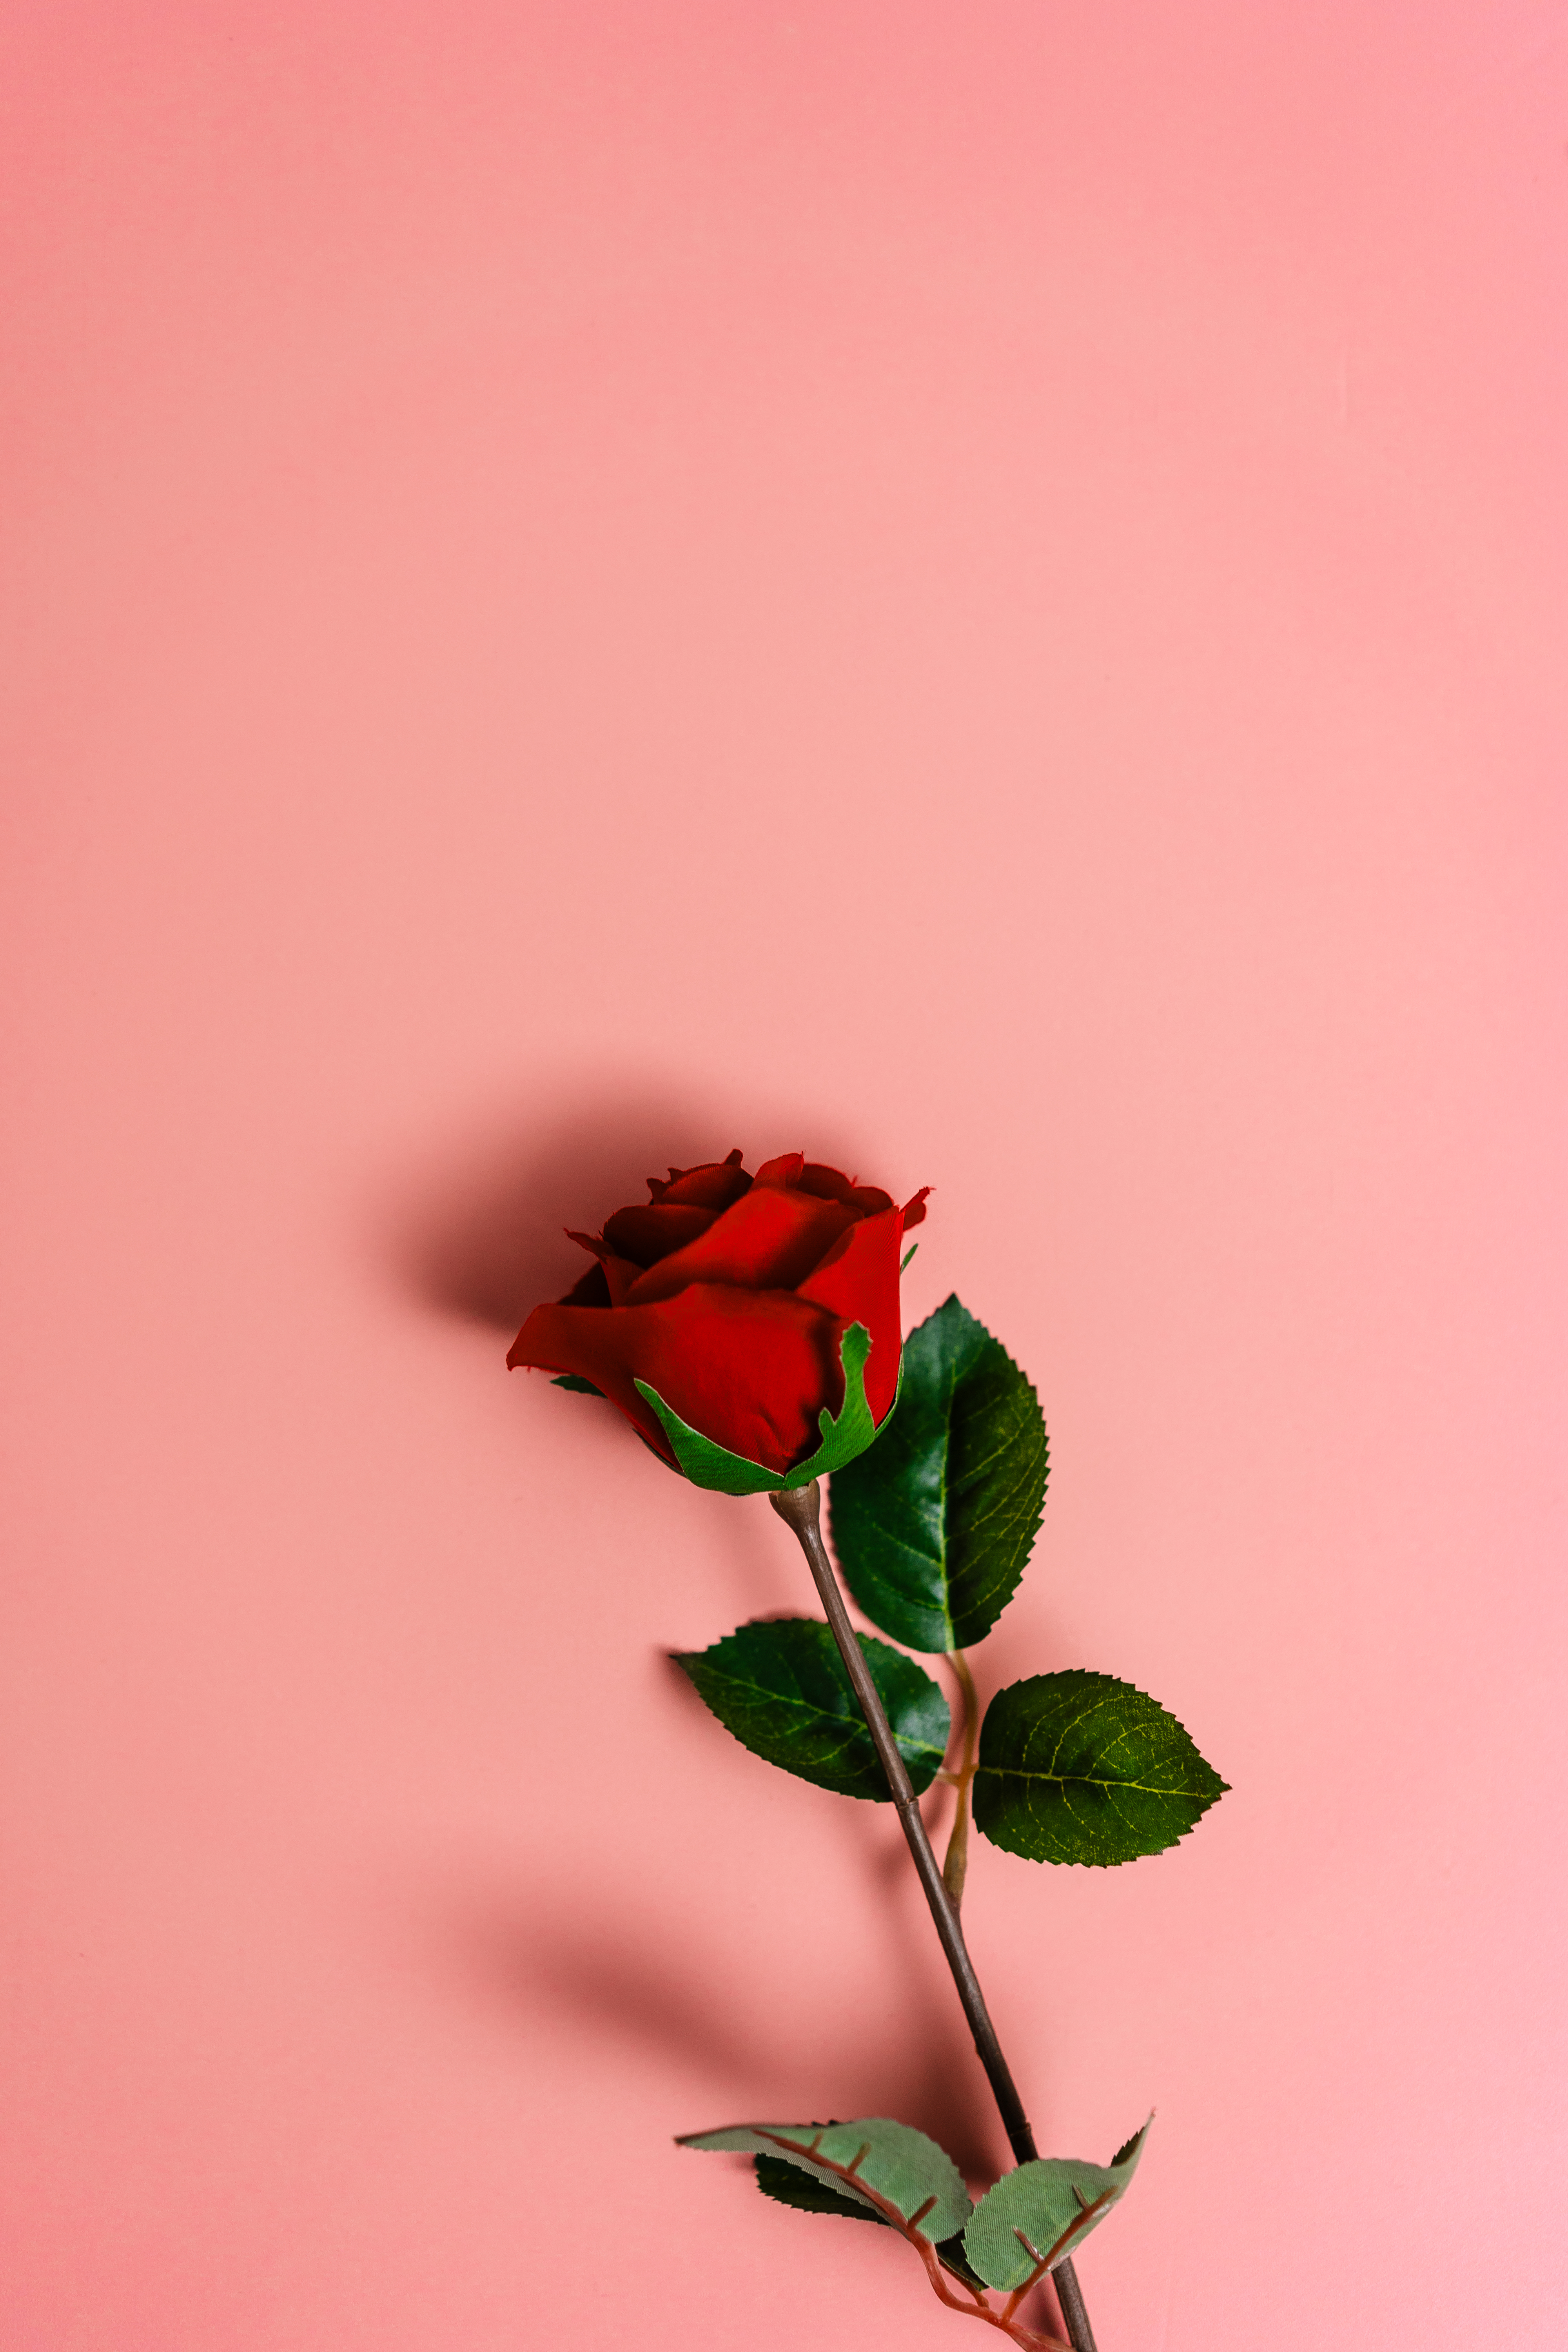 https://picjumbo.com/wp-content/uploads/beautiful-red-rose-on-pastel-background-free-photo.jpg